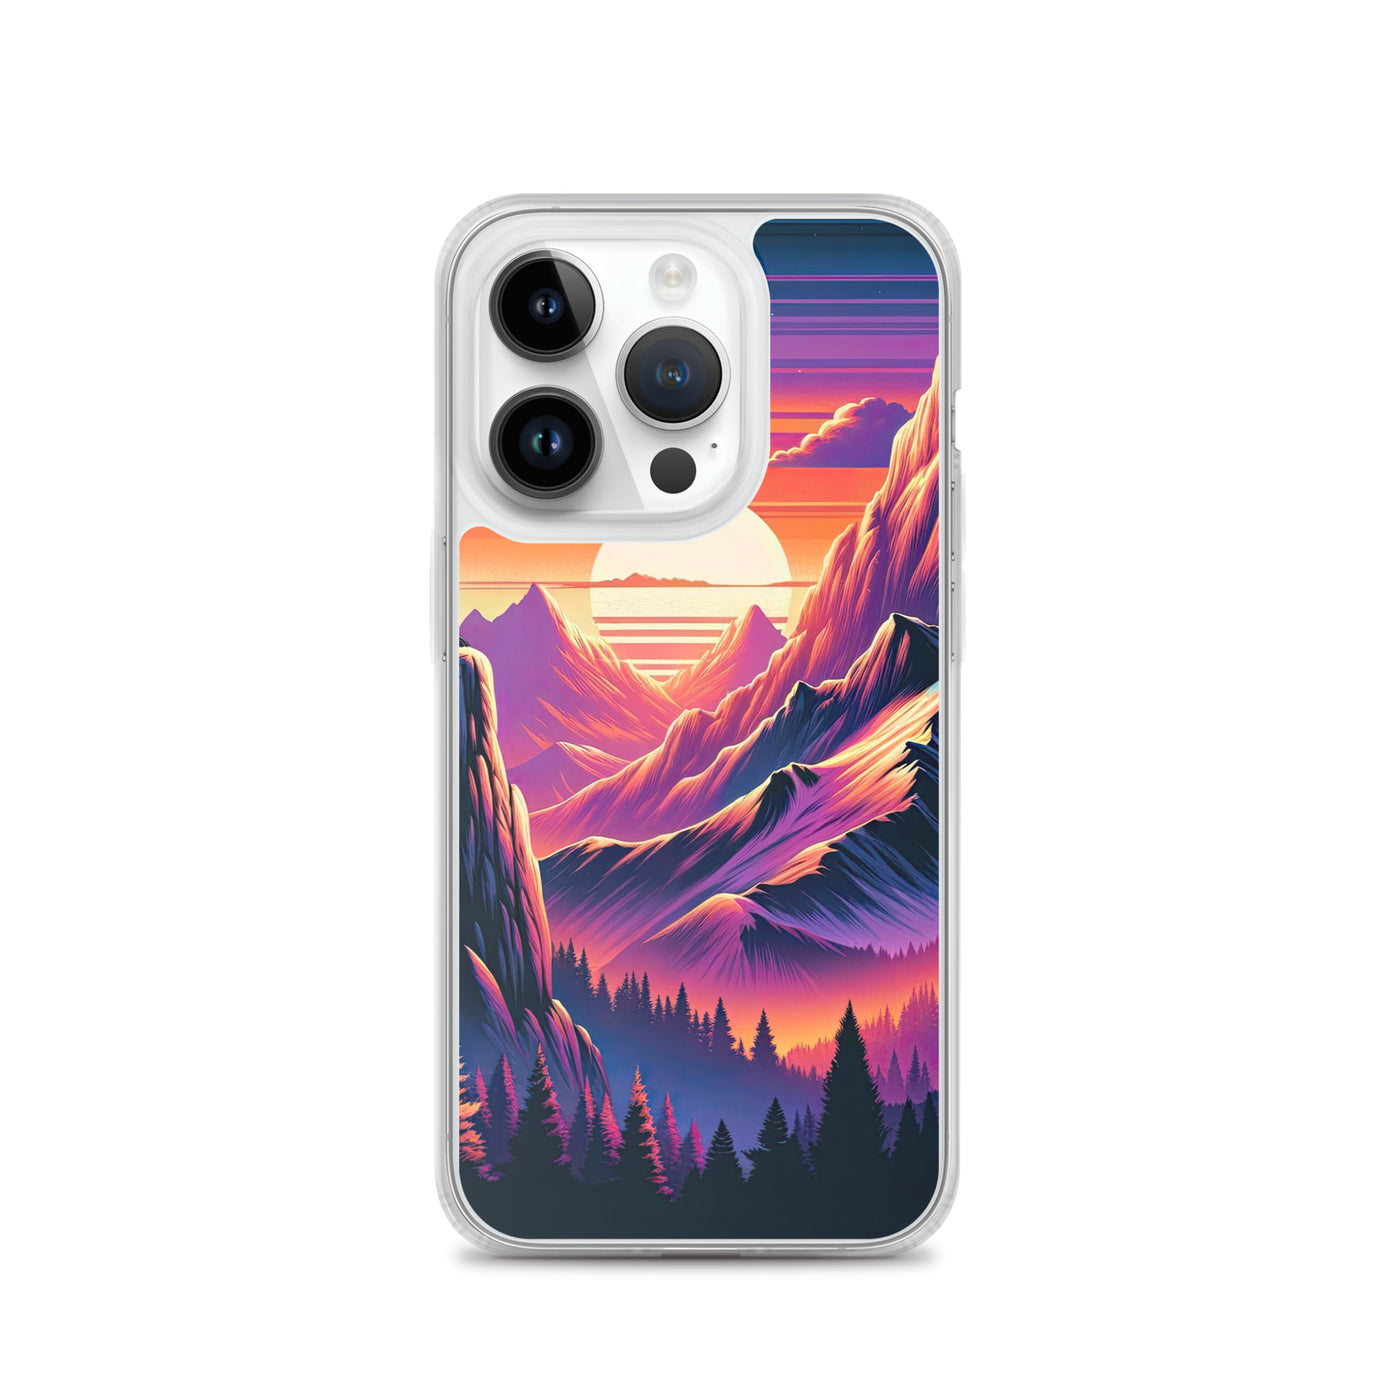 Alpen-Sonnenuntergang mit Bär auf Hügel, warmes Himmelsfarbenspiel - iPhone Schutzhülle (durchsichtig) camping xxx yyy zzz iPhone 14 Pro